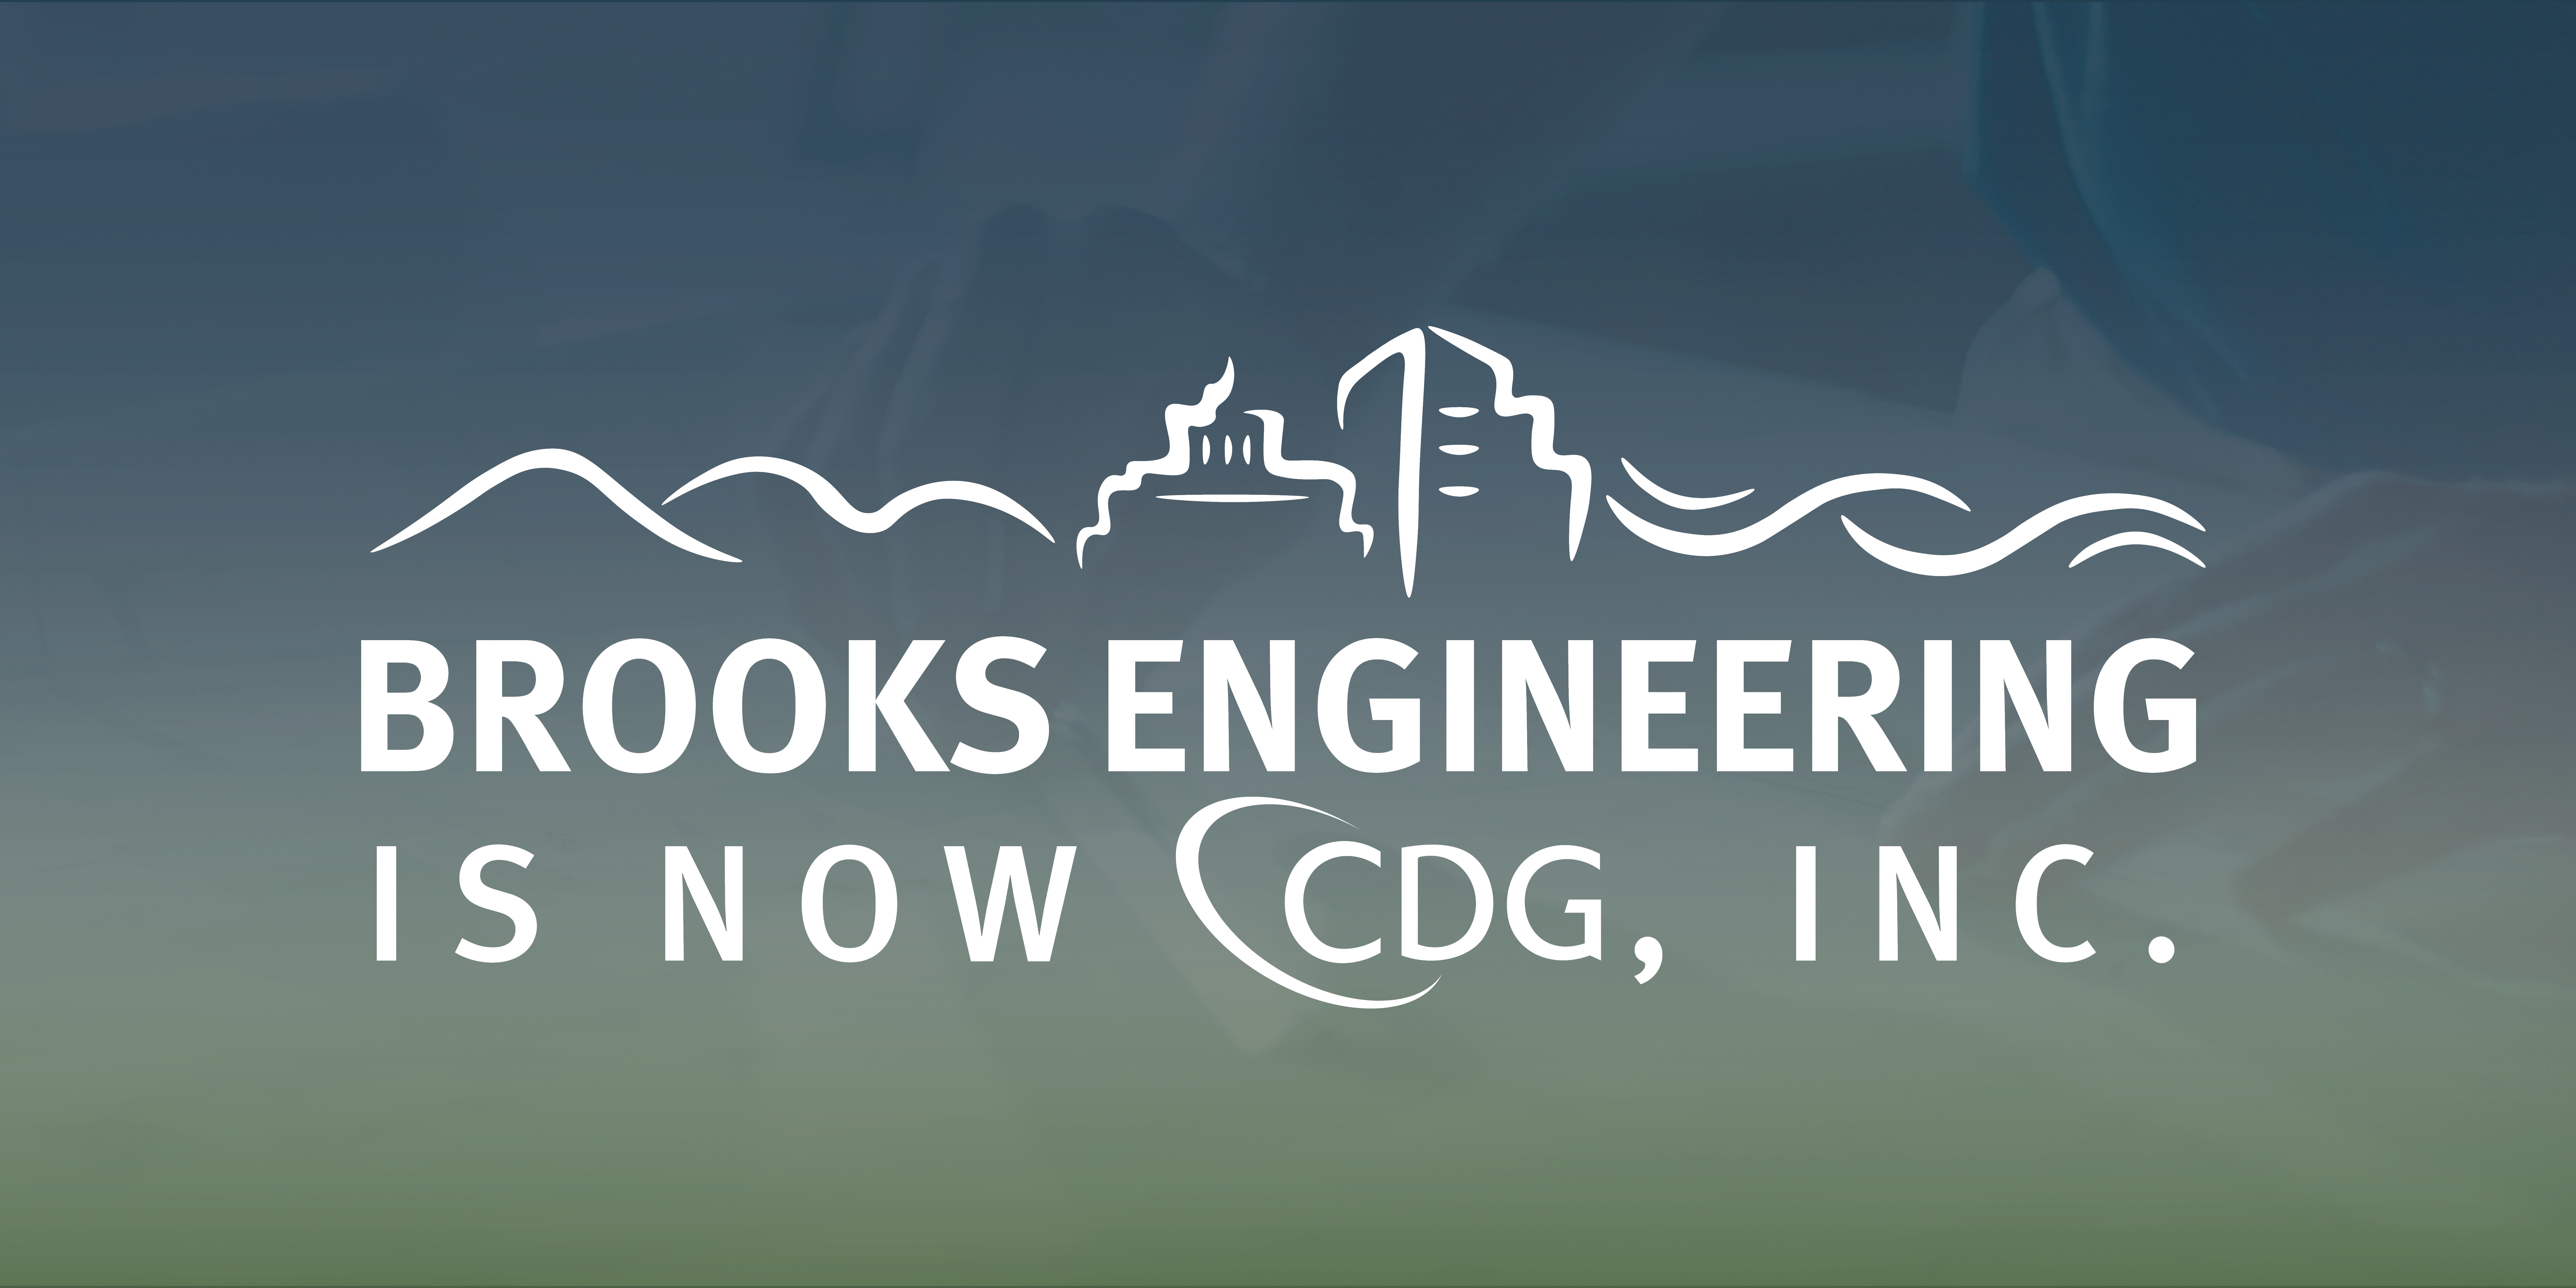 Brooks Engineering is now CDG Inc